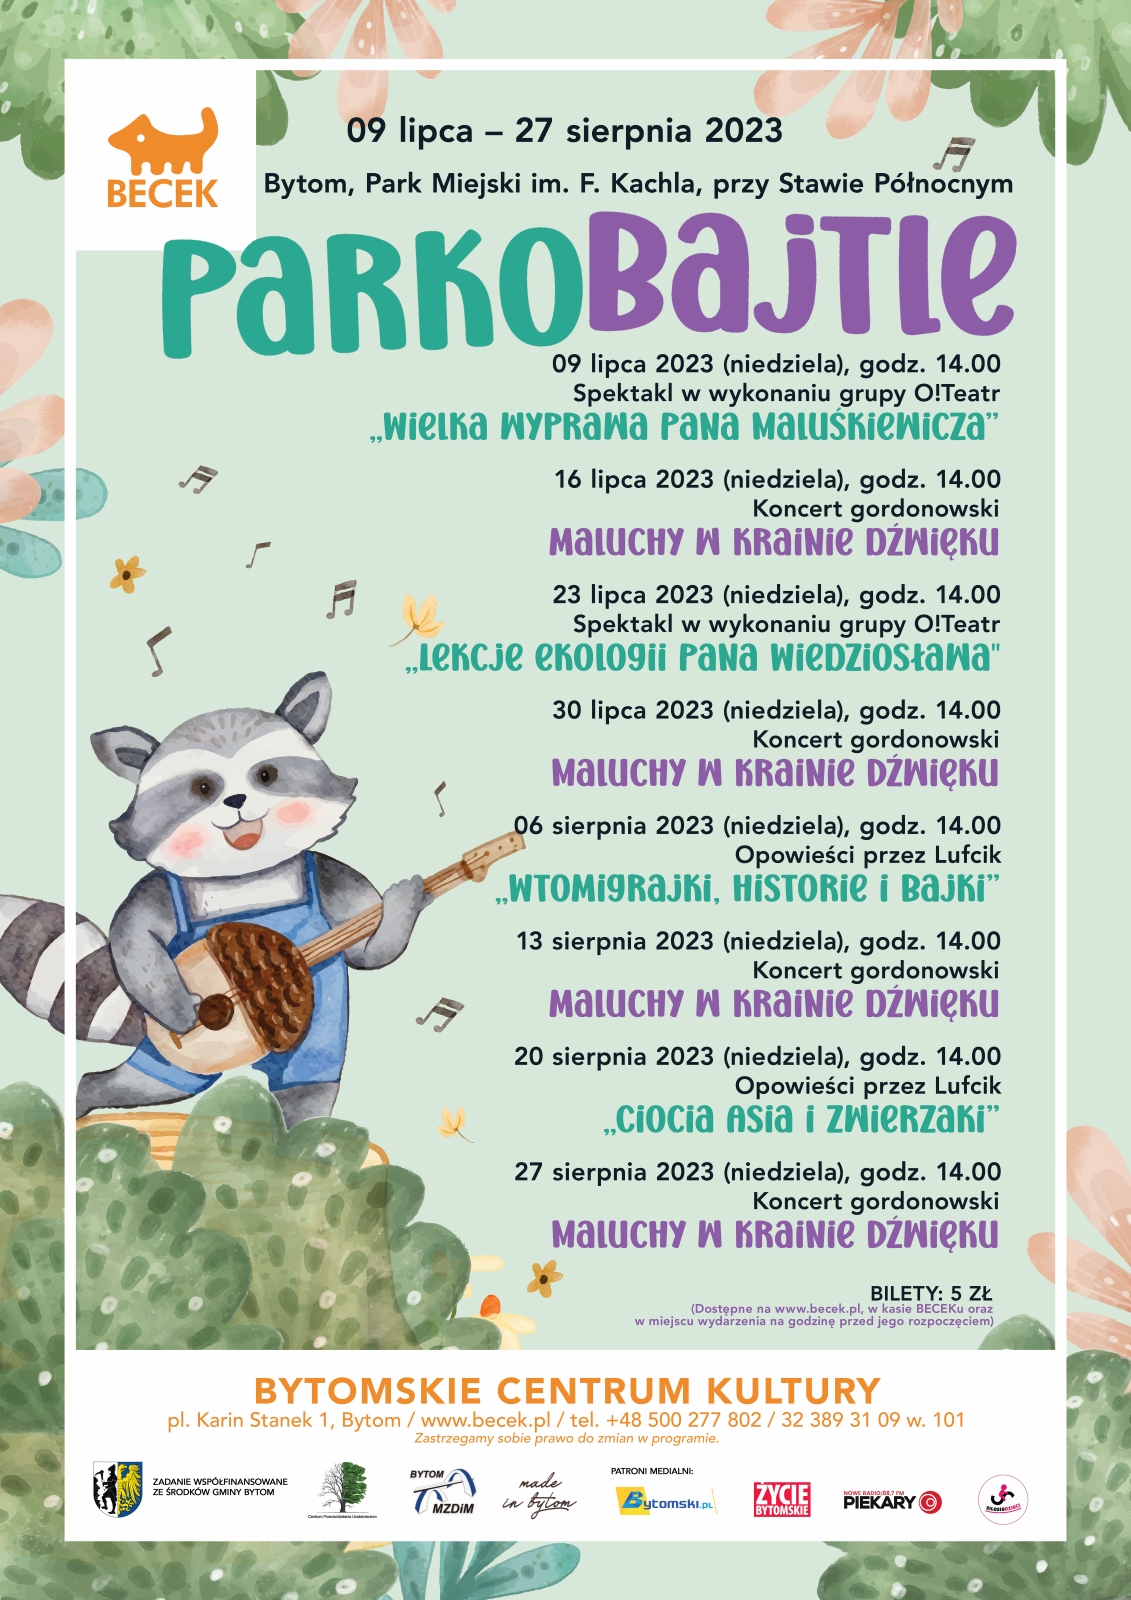 Parkobajtle - koncerty gordonowskie. Bytom